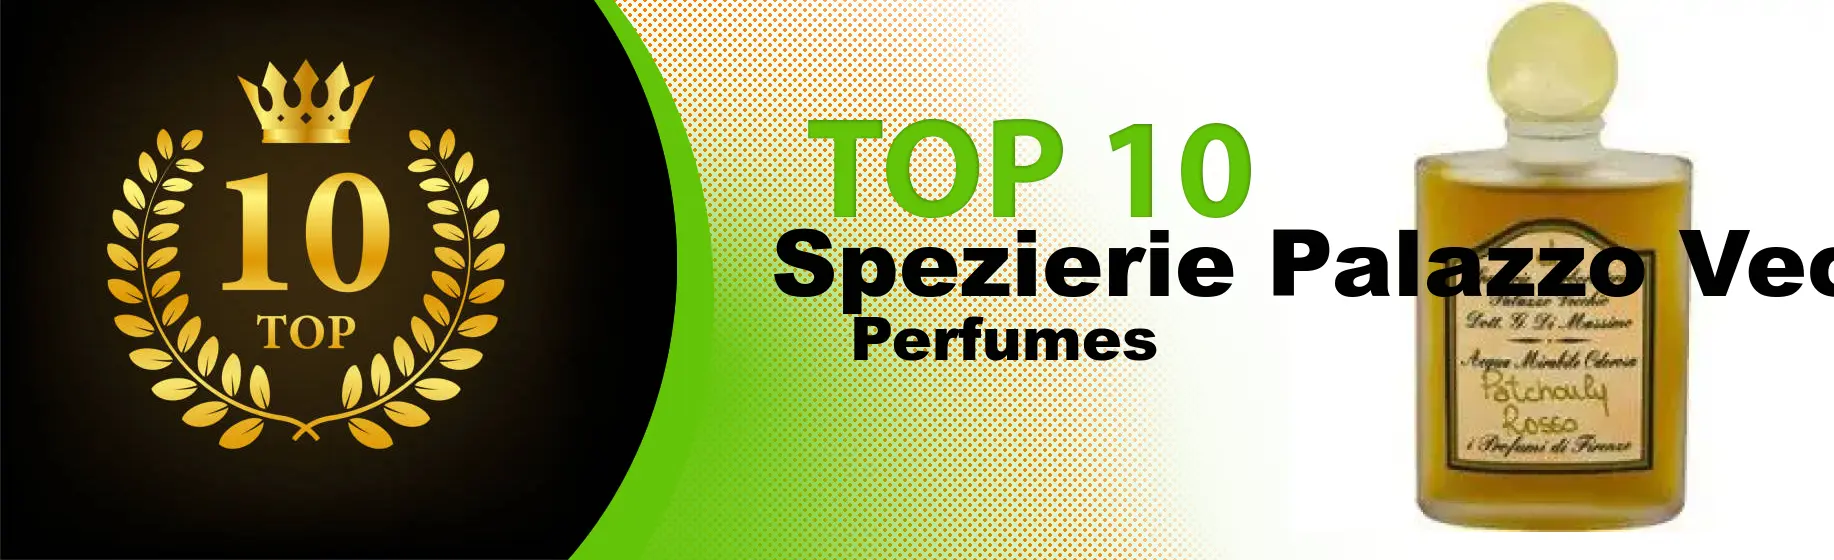 Top 10 Best Spezierie Palazzo Vecchio / I Profumi di Firenze perfumes : Ultimate Buyer Guide